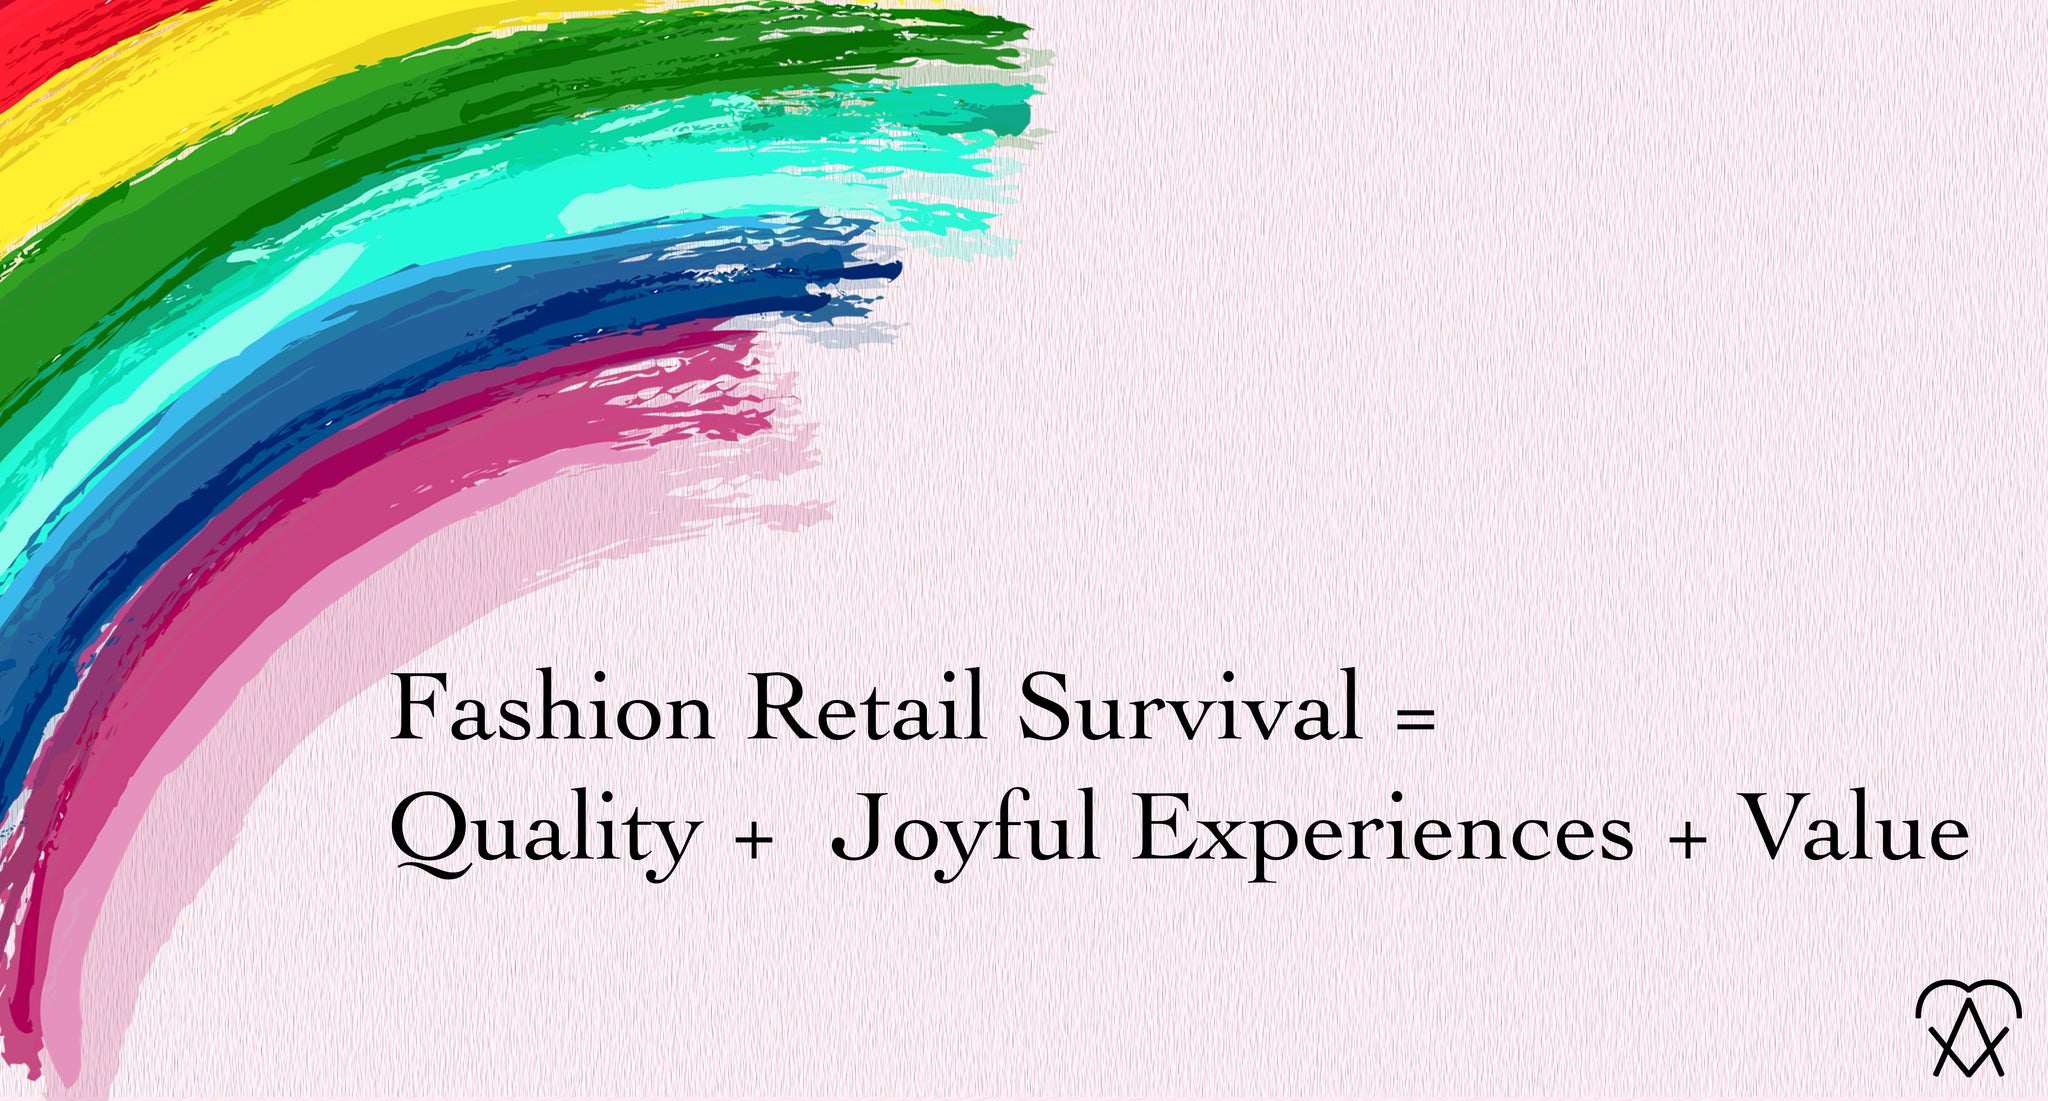 Fashion Retail Survival by Anoosheh Kalantari - Anoosheh & Banafsheh - Fashion Designers and Fashion Bloggers